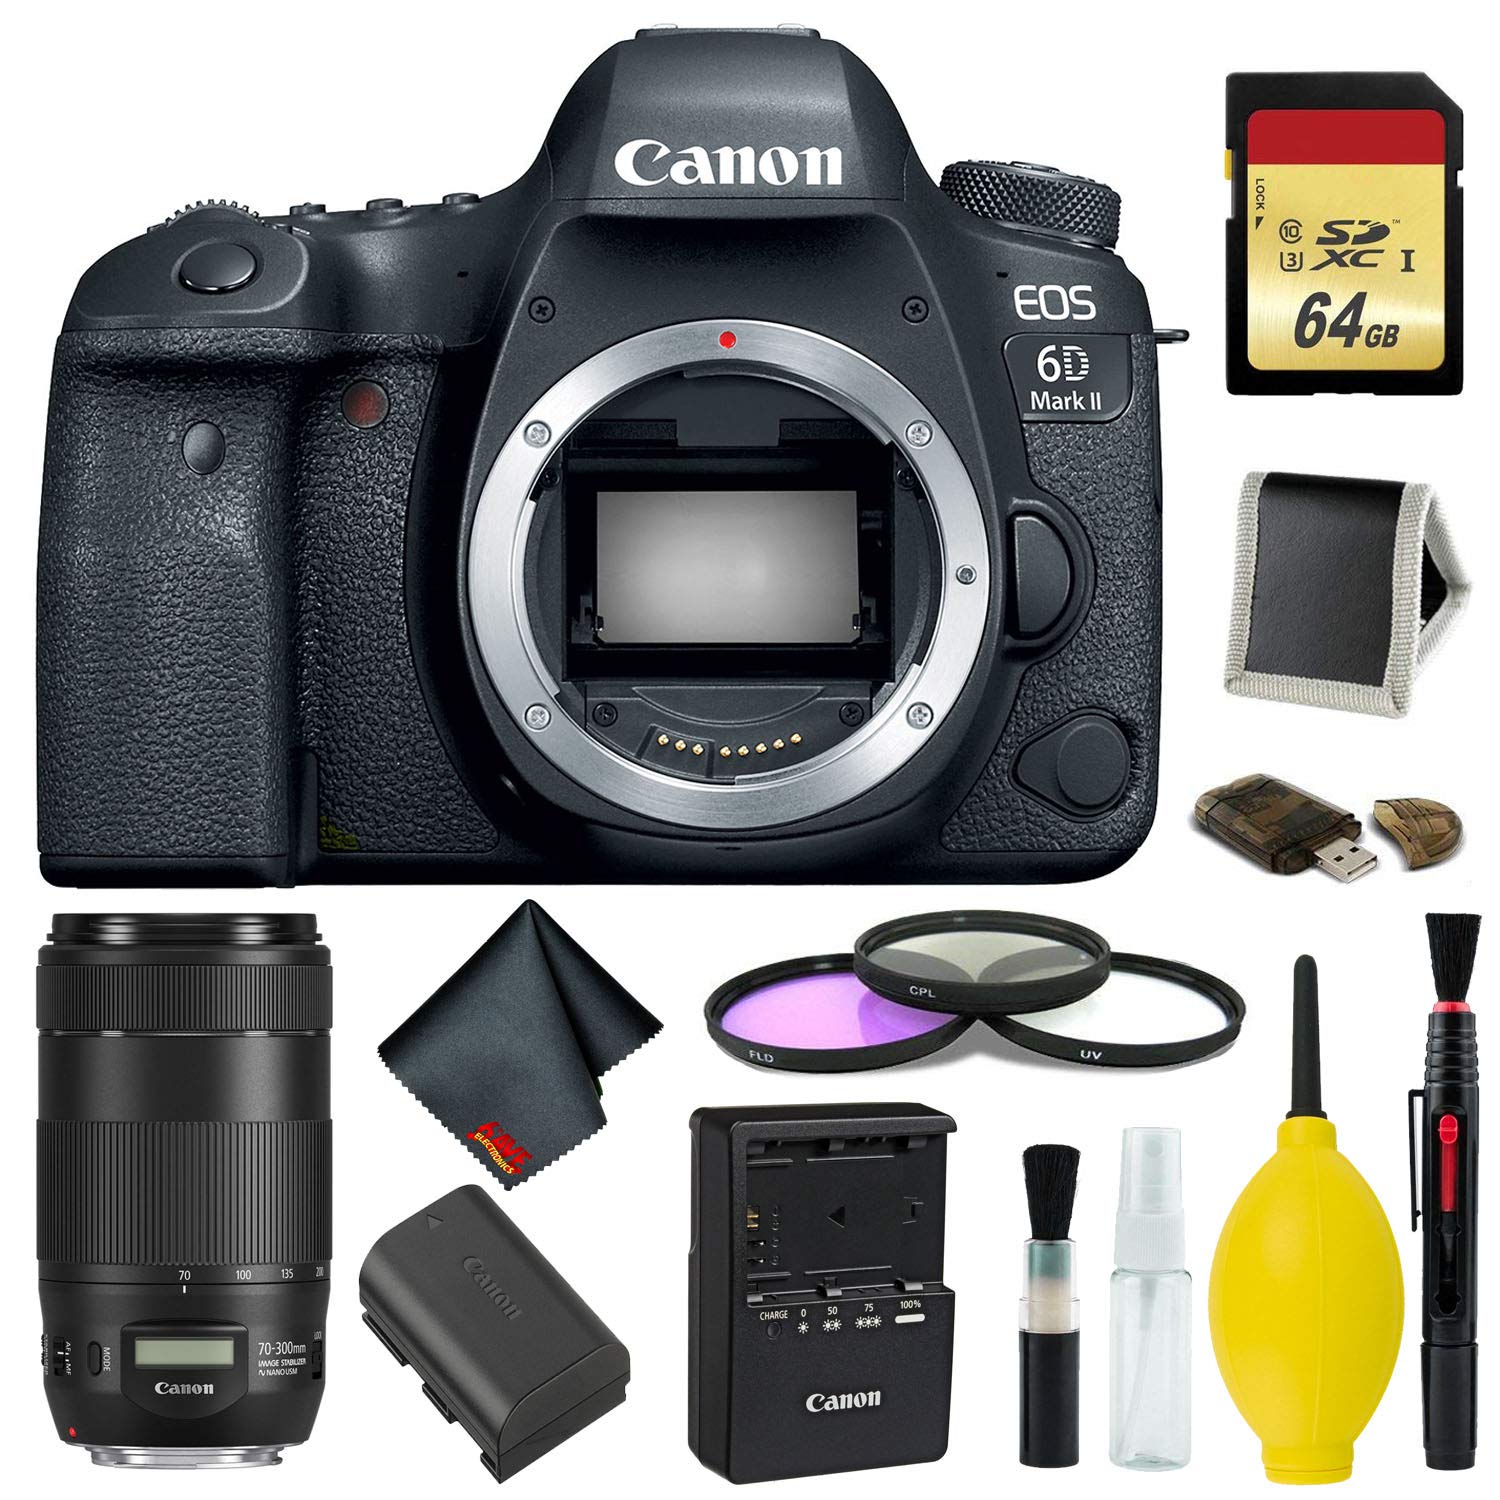 Canon EOS 6D Mark II DSLR Camera Body Only Complete Kit (International Model) w/Canon EF 70-300mm f/4-5.6 is II USM Lens